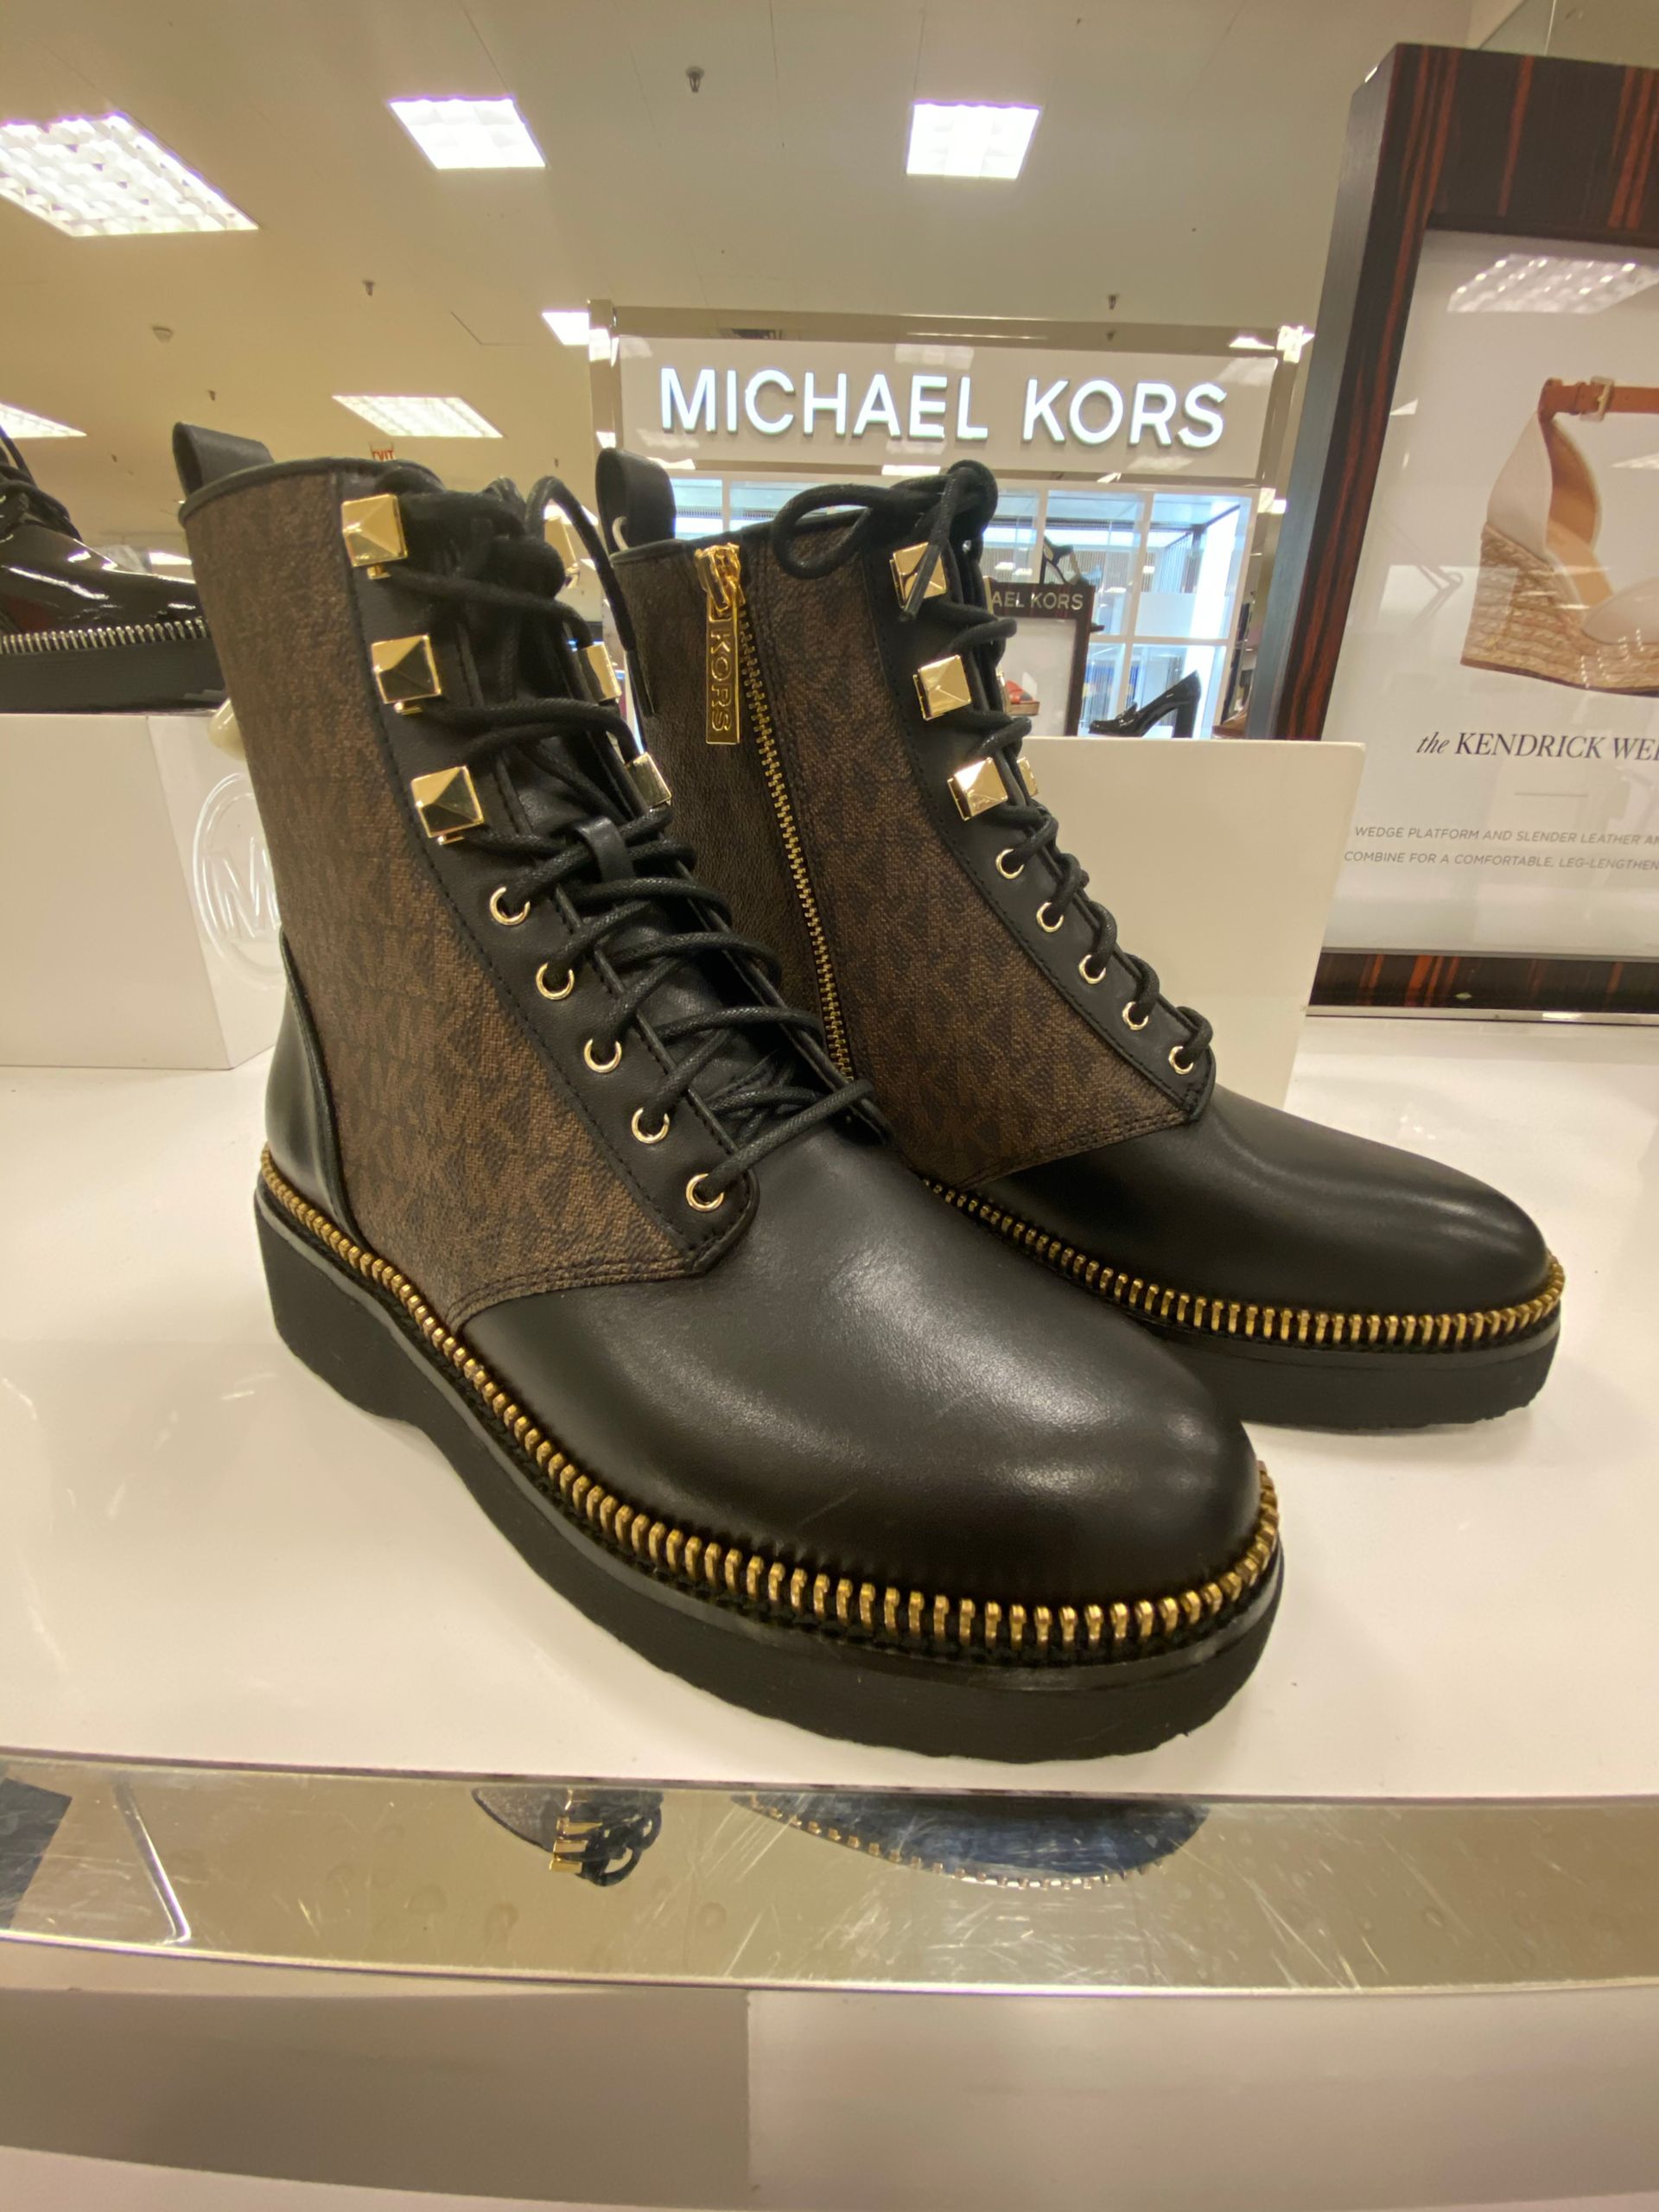 macys shoes michael kors boots